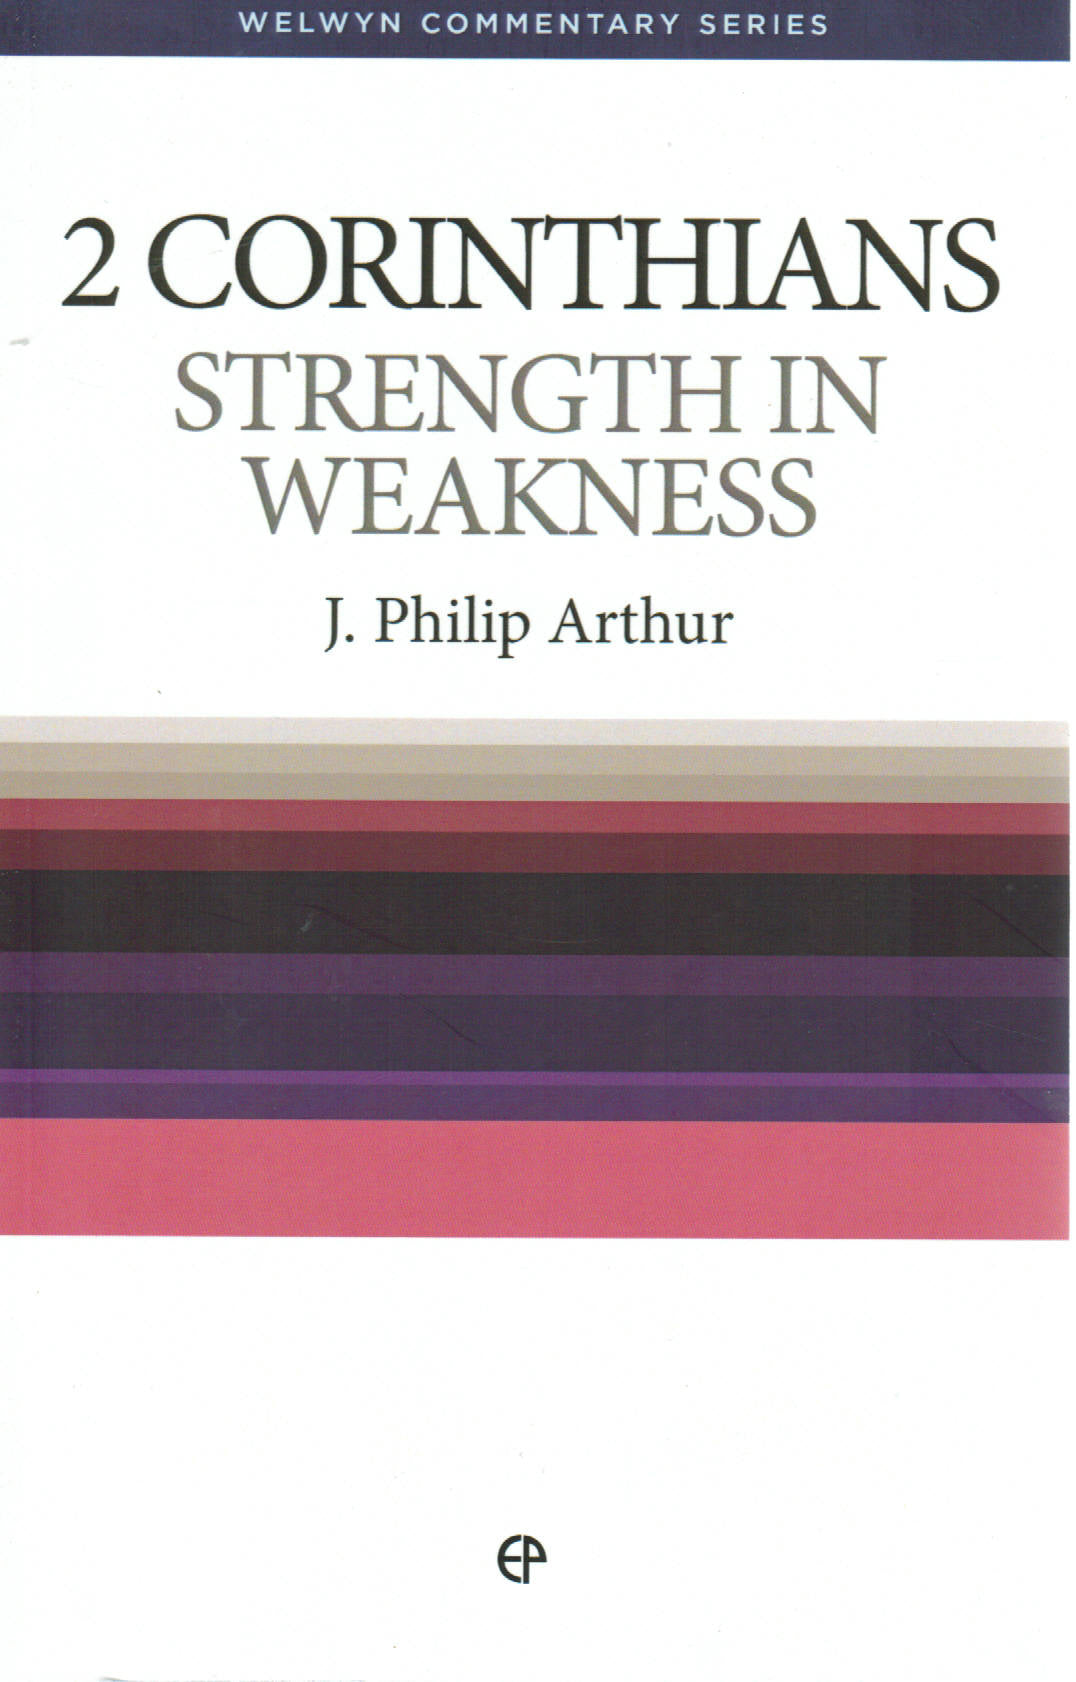 Welwyn Commentary Series - 2 Corinthians: Strength in Weakness